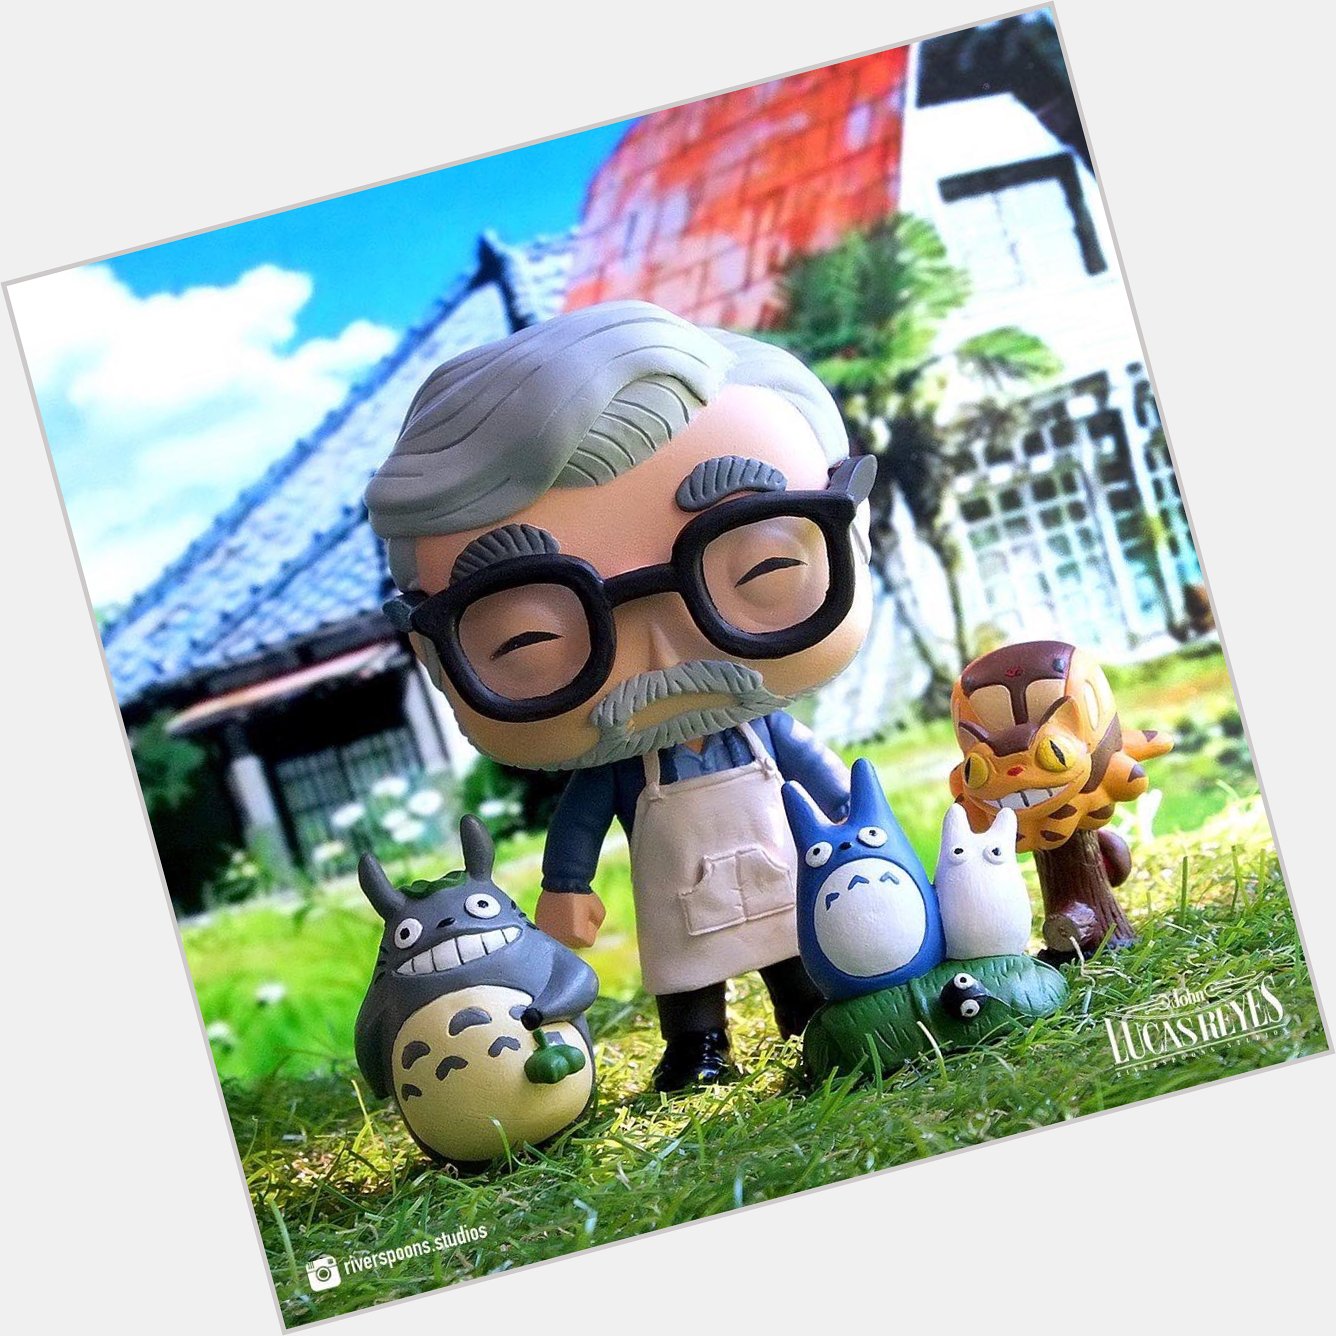 Happy Birthday Hayao Miyazaki!  